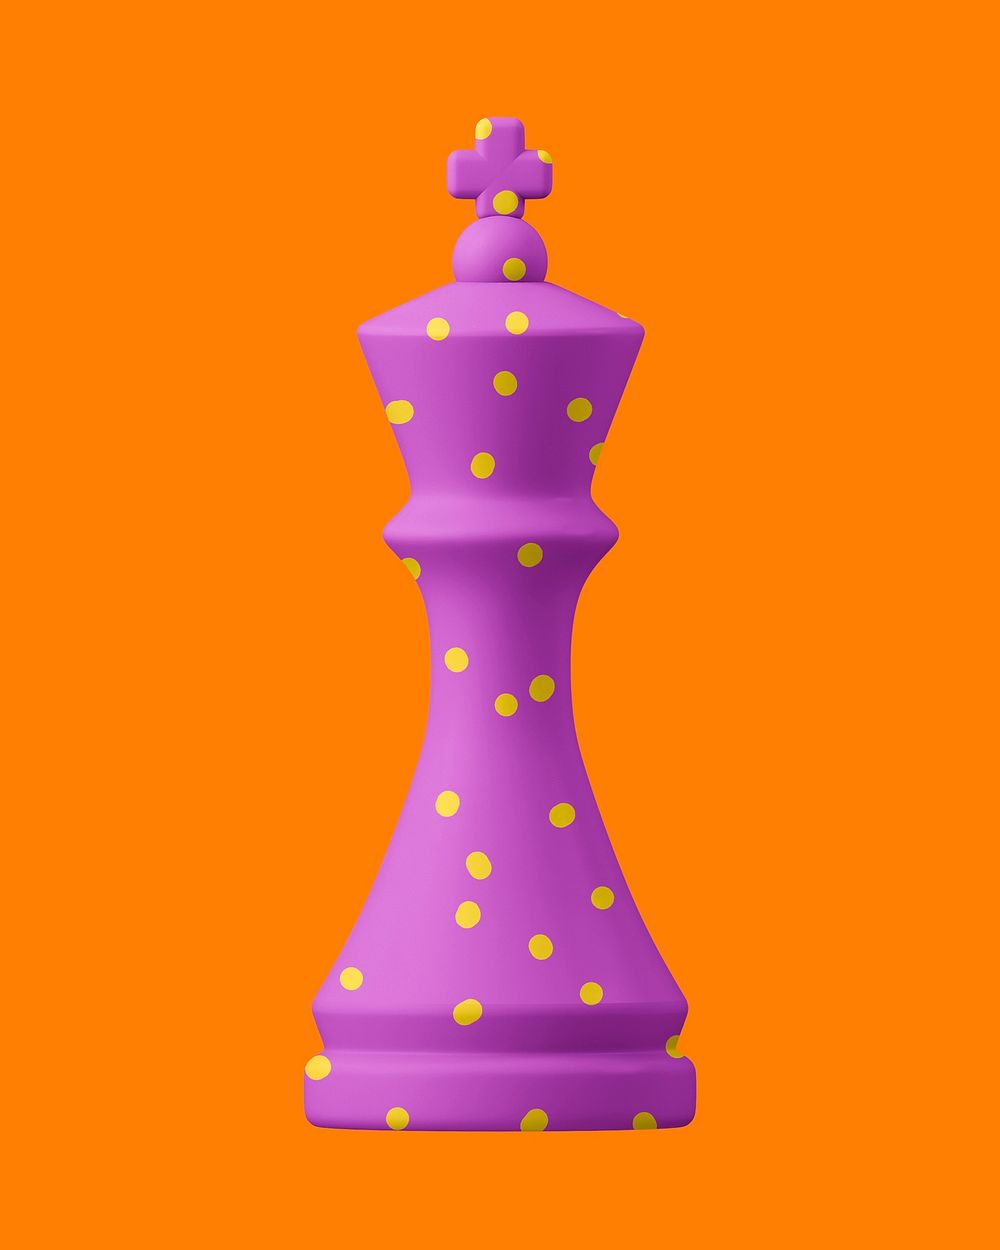 Purple chess piece, 3D object illustration psd